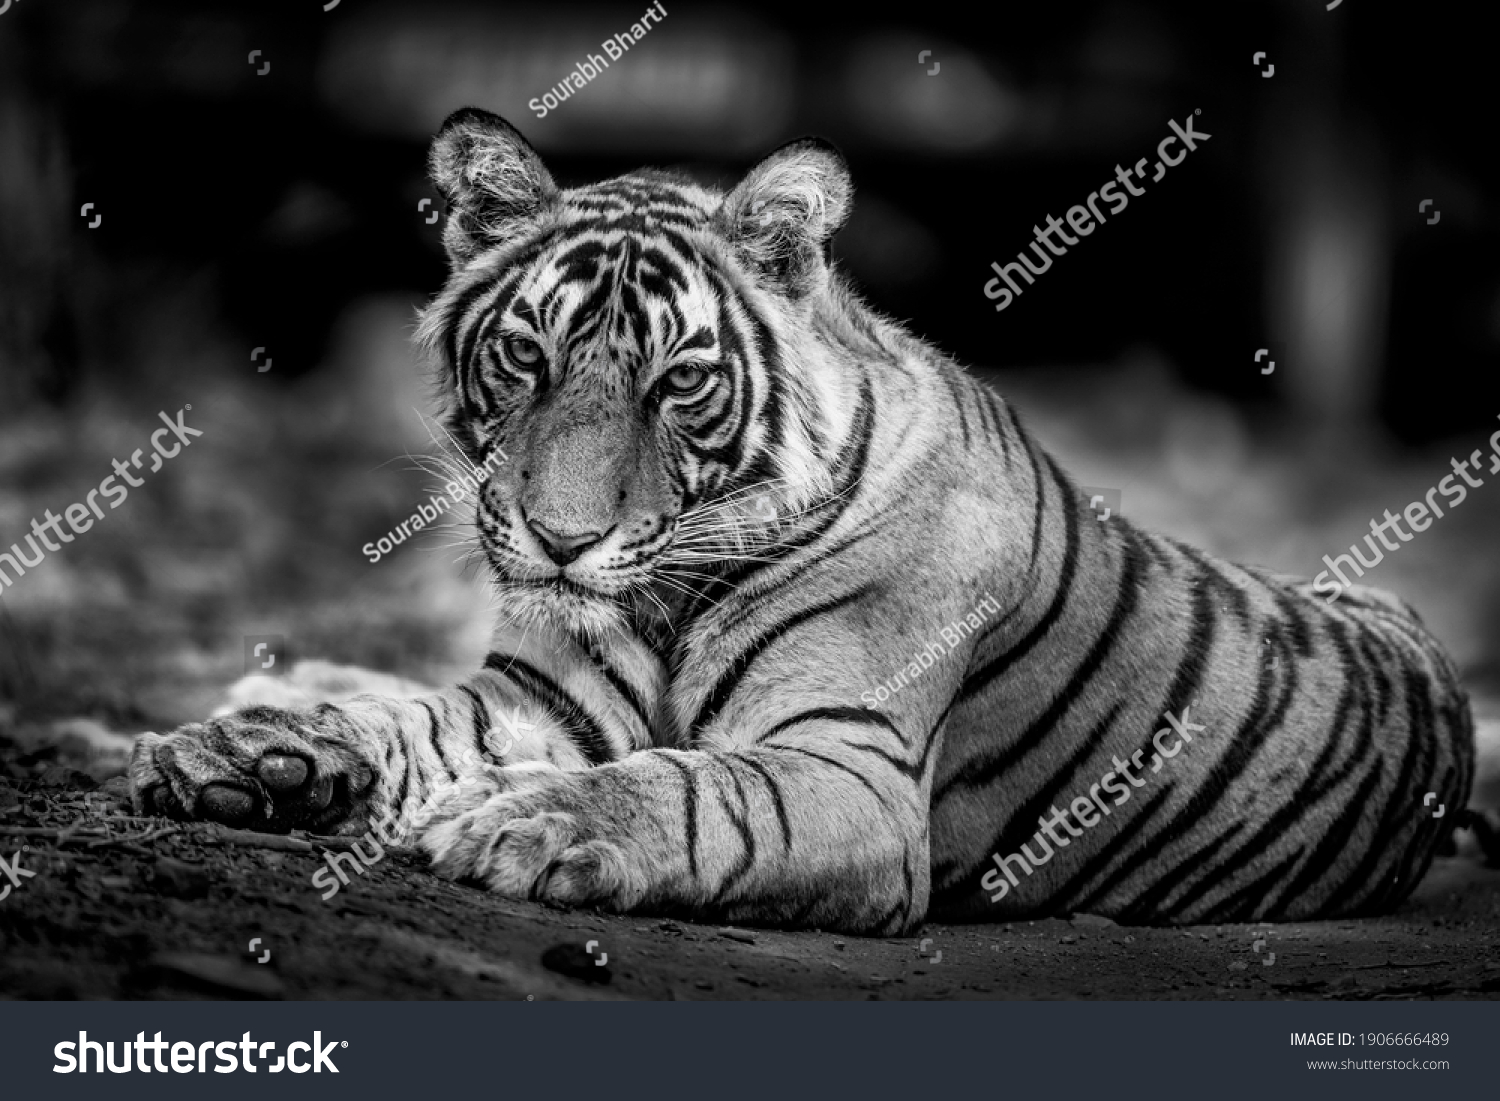 Черно-белый тигр